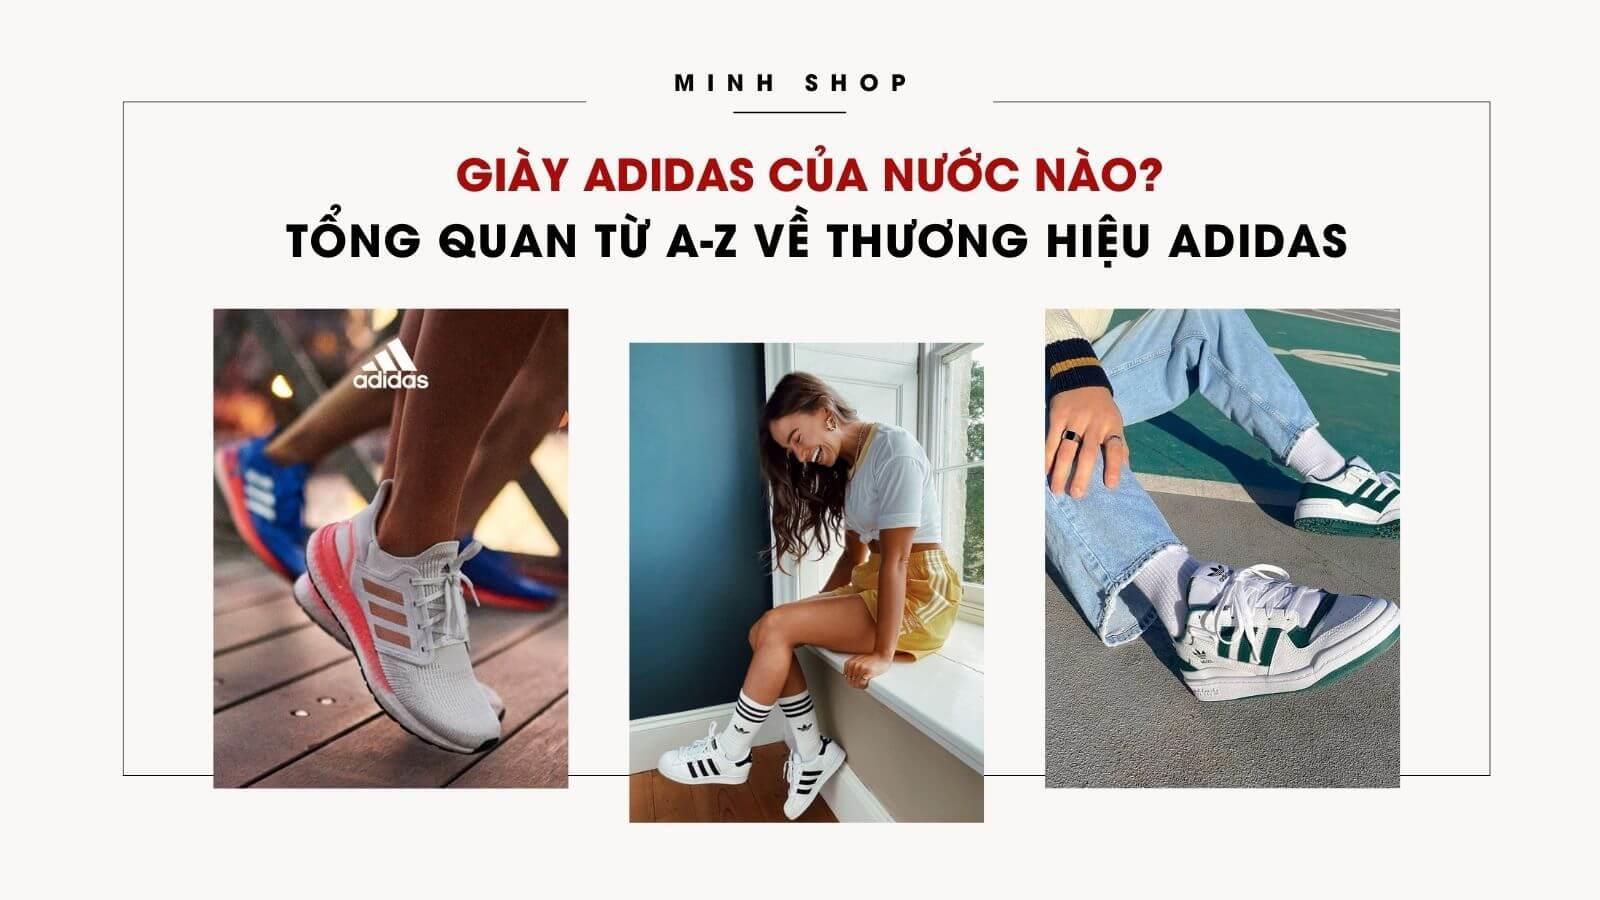 giay-adidas-cua-nuoc-nao-tong-quan-tu-a-z-ve-thuong-hieu-adidas